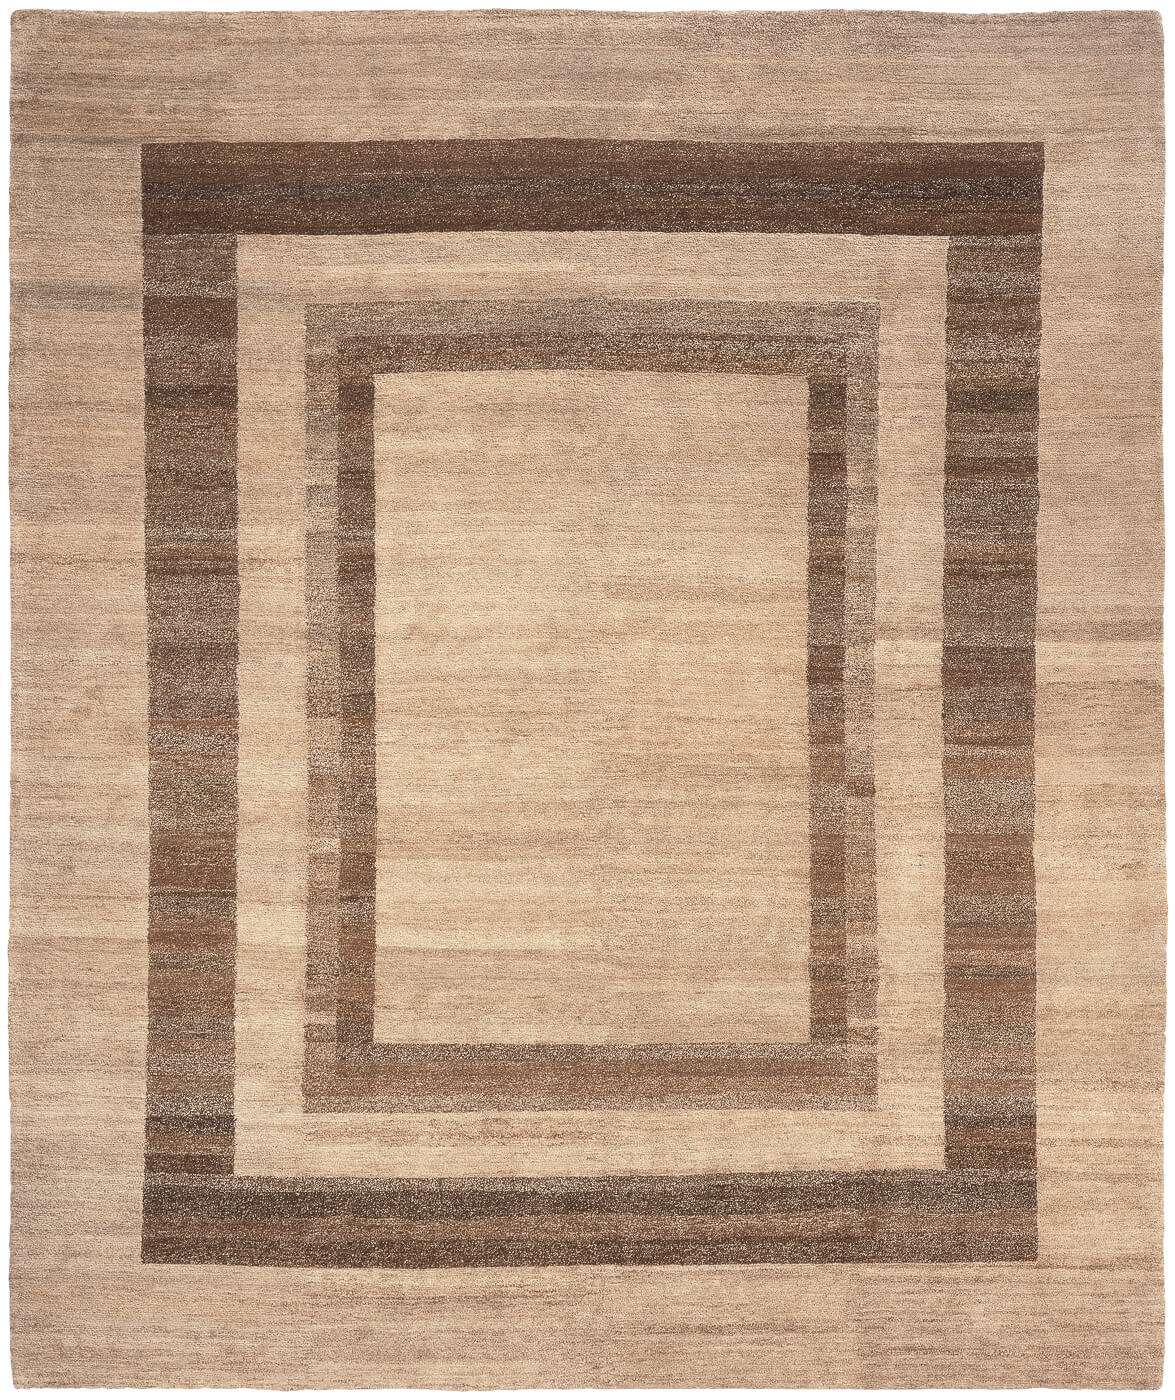 Triple Border Brown Luxury Hand-woven Rug ☞ Size: 300 x 400 cm